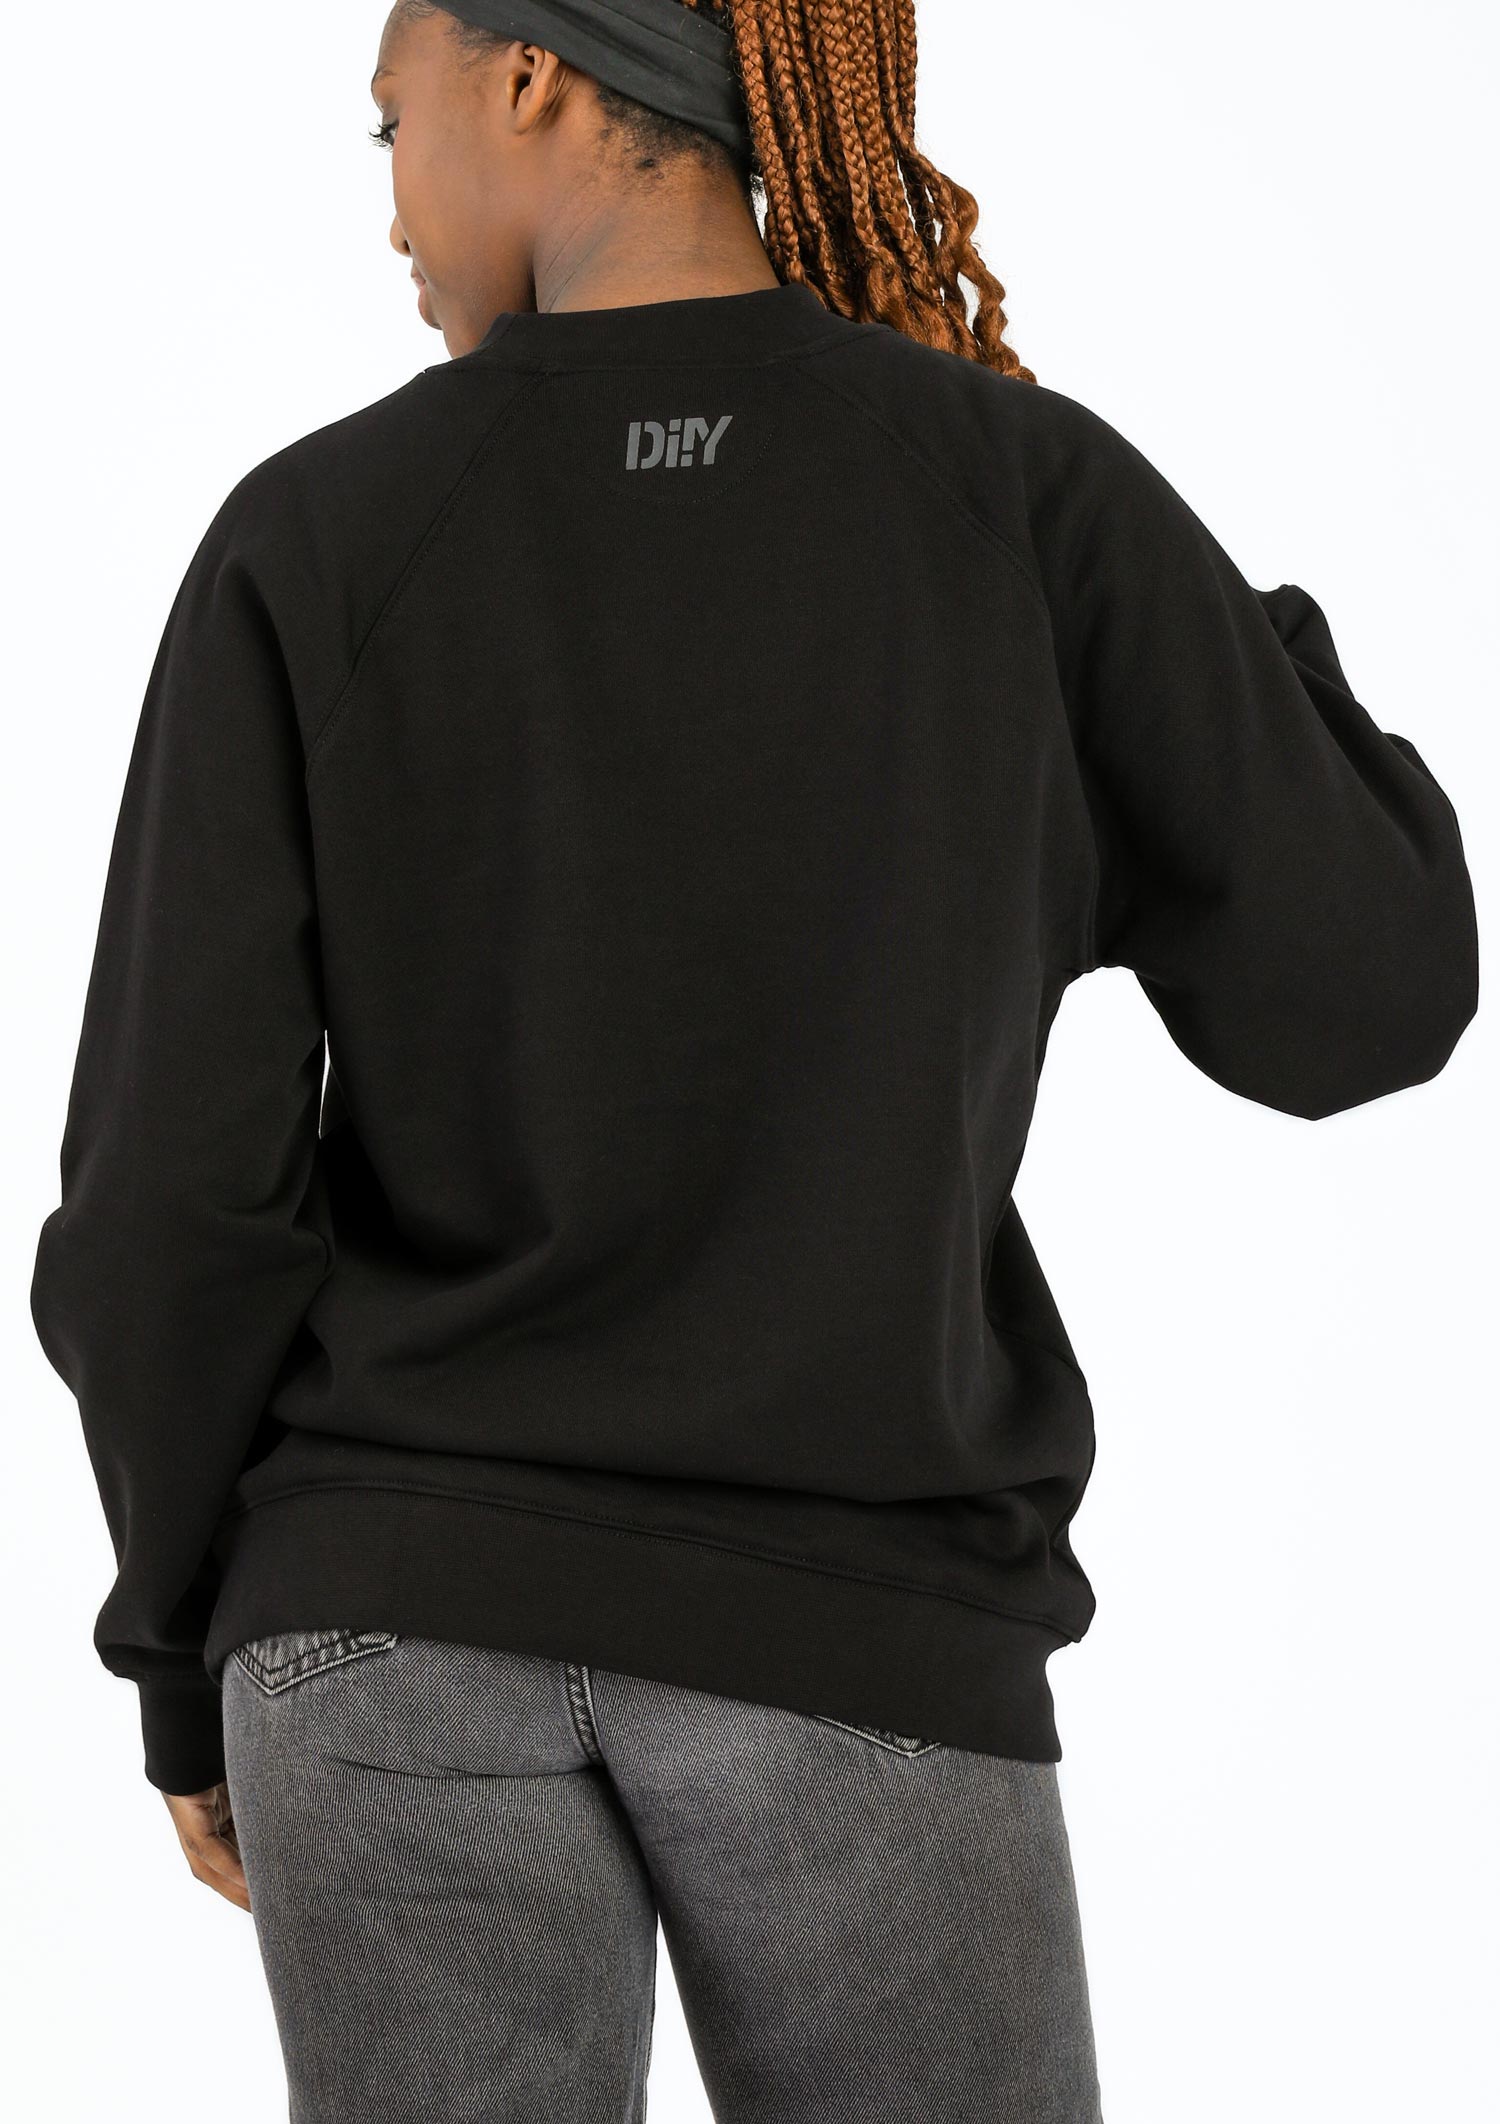 DIIY - Sweatshirt "Kiez Performance"